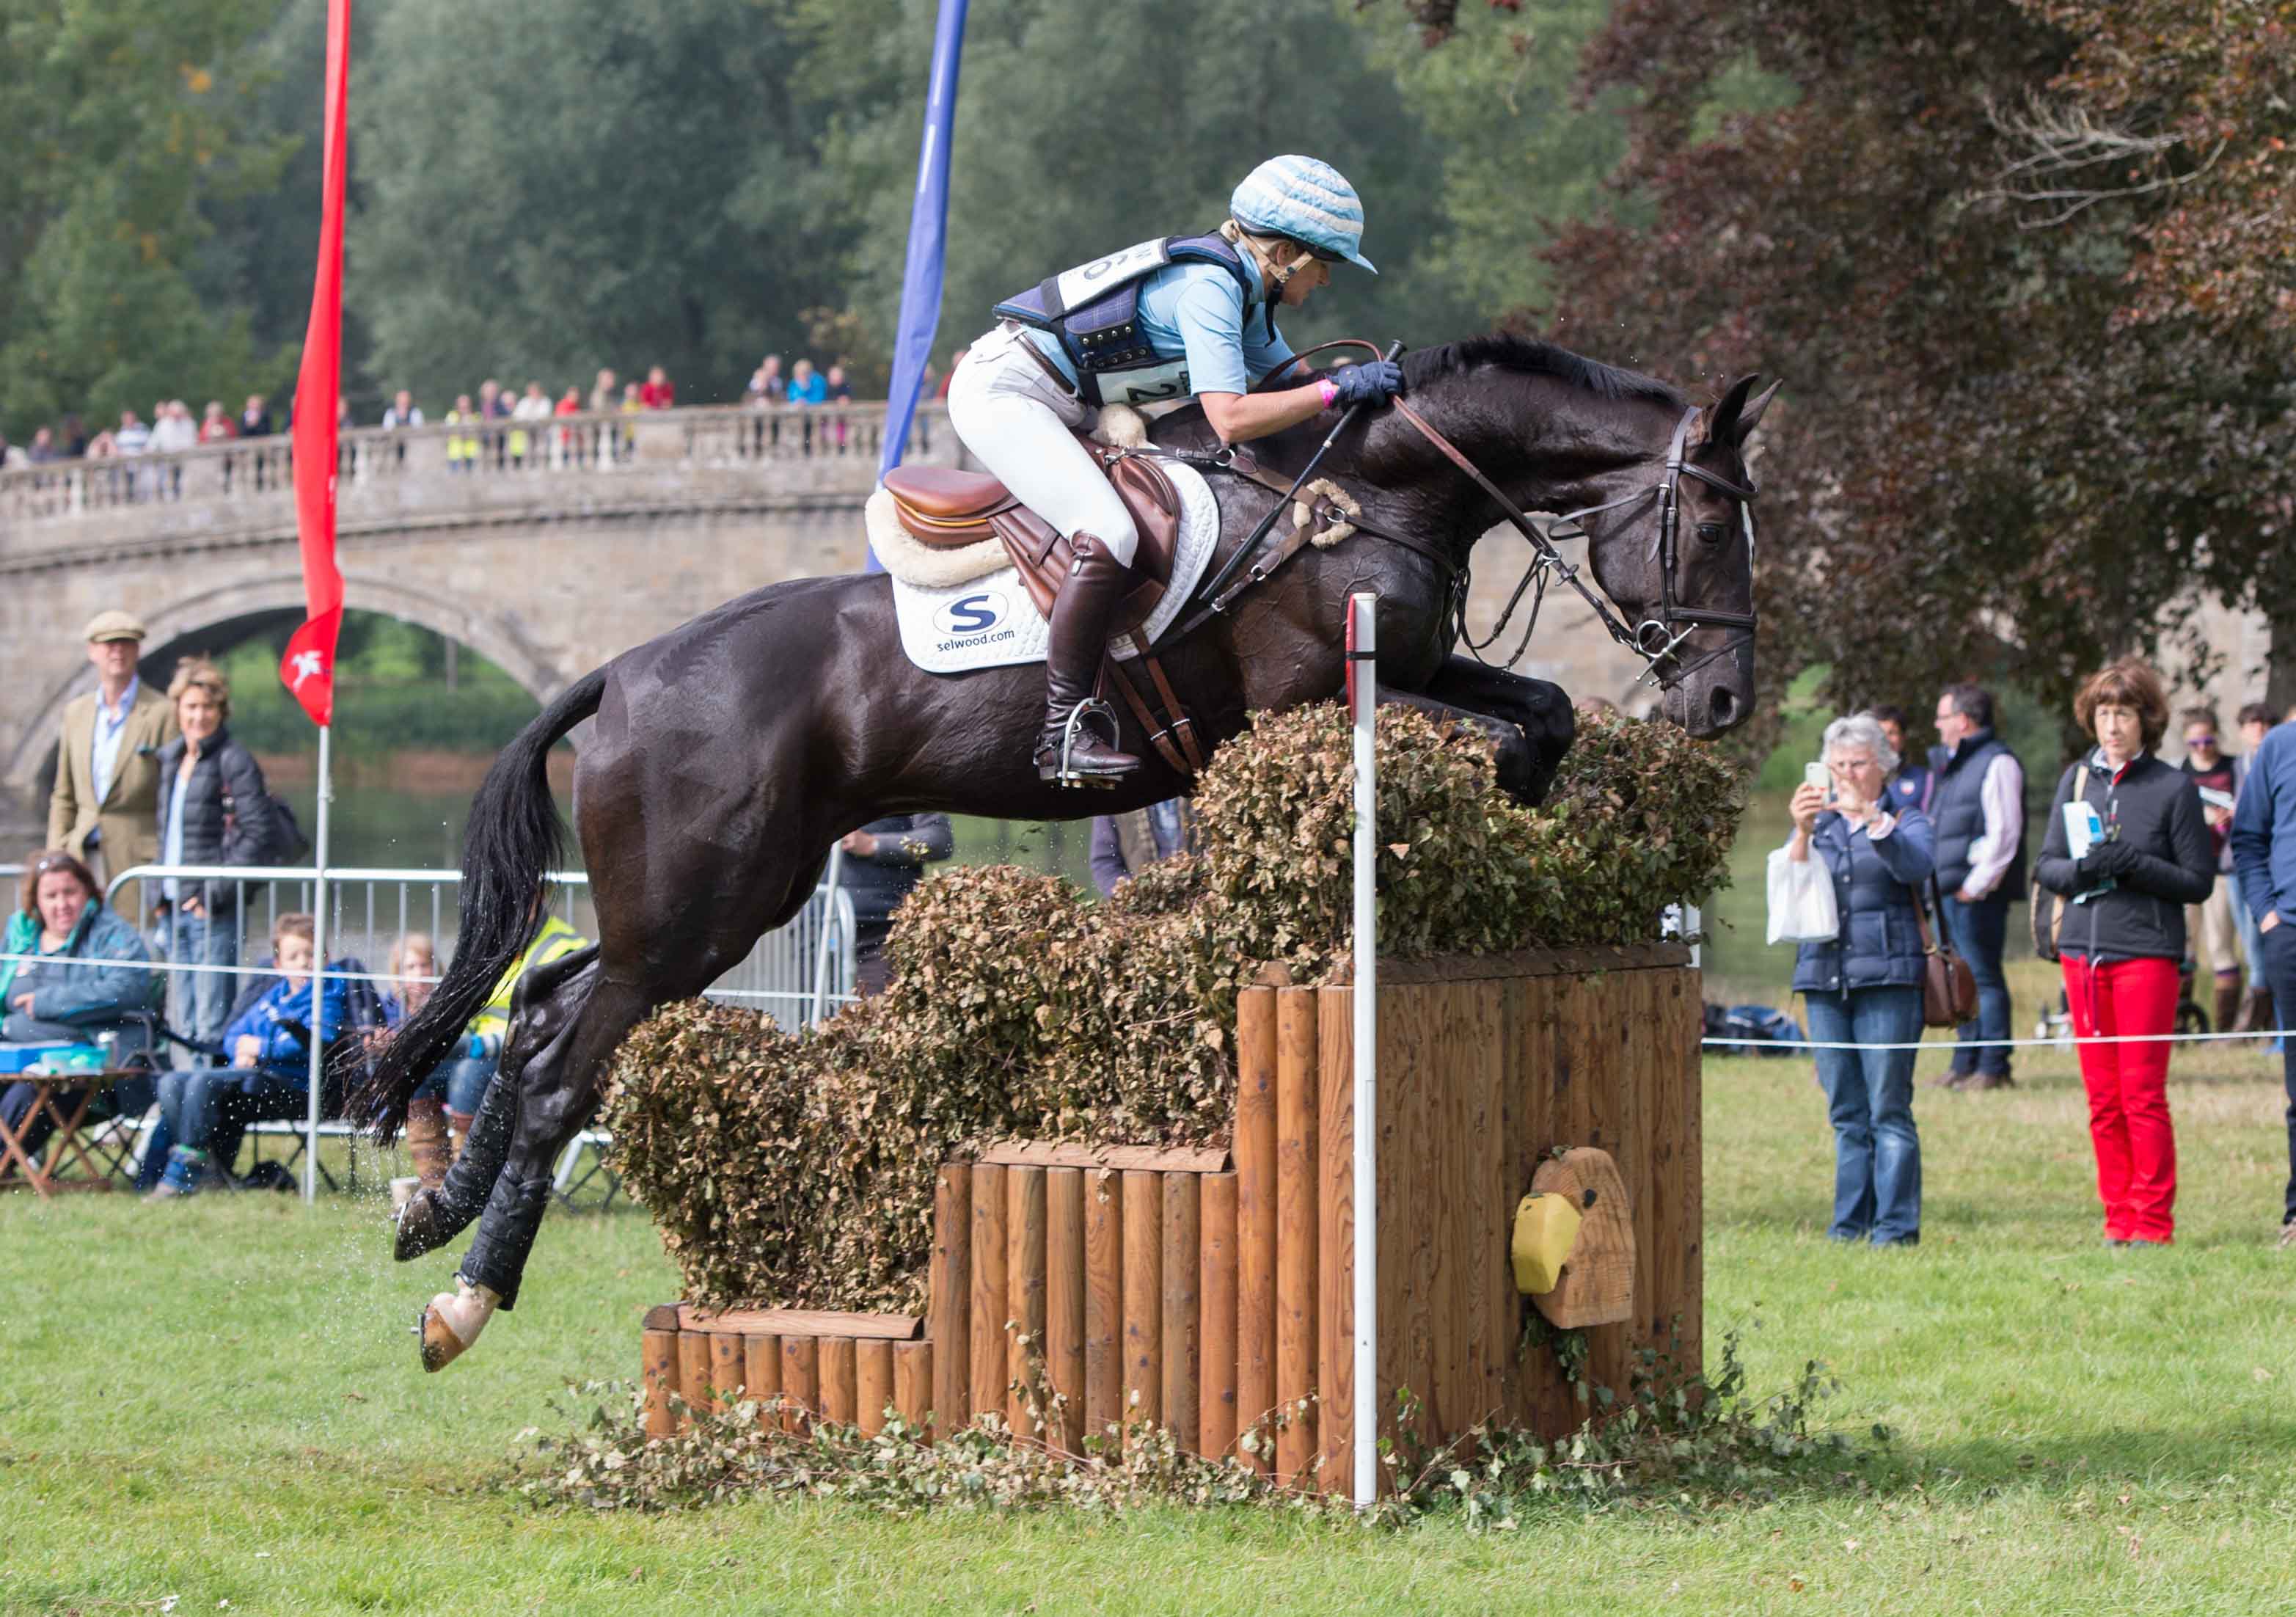 Blenheim Palace International Horse Trials 2015 CIC3* winner Jonelle Price. Image credit Adam Fanthorpe/Blenheim Palace International Horse Trials.